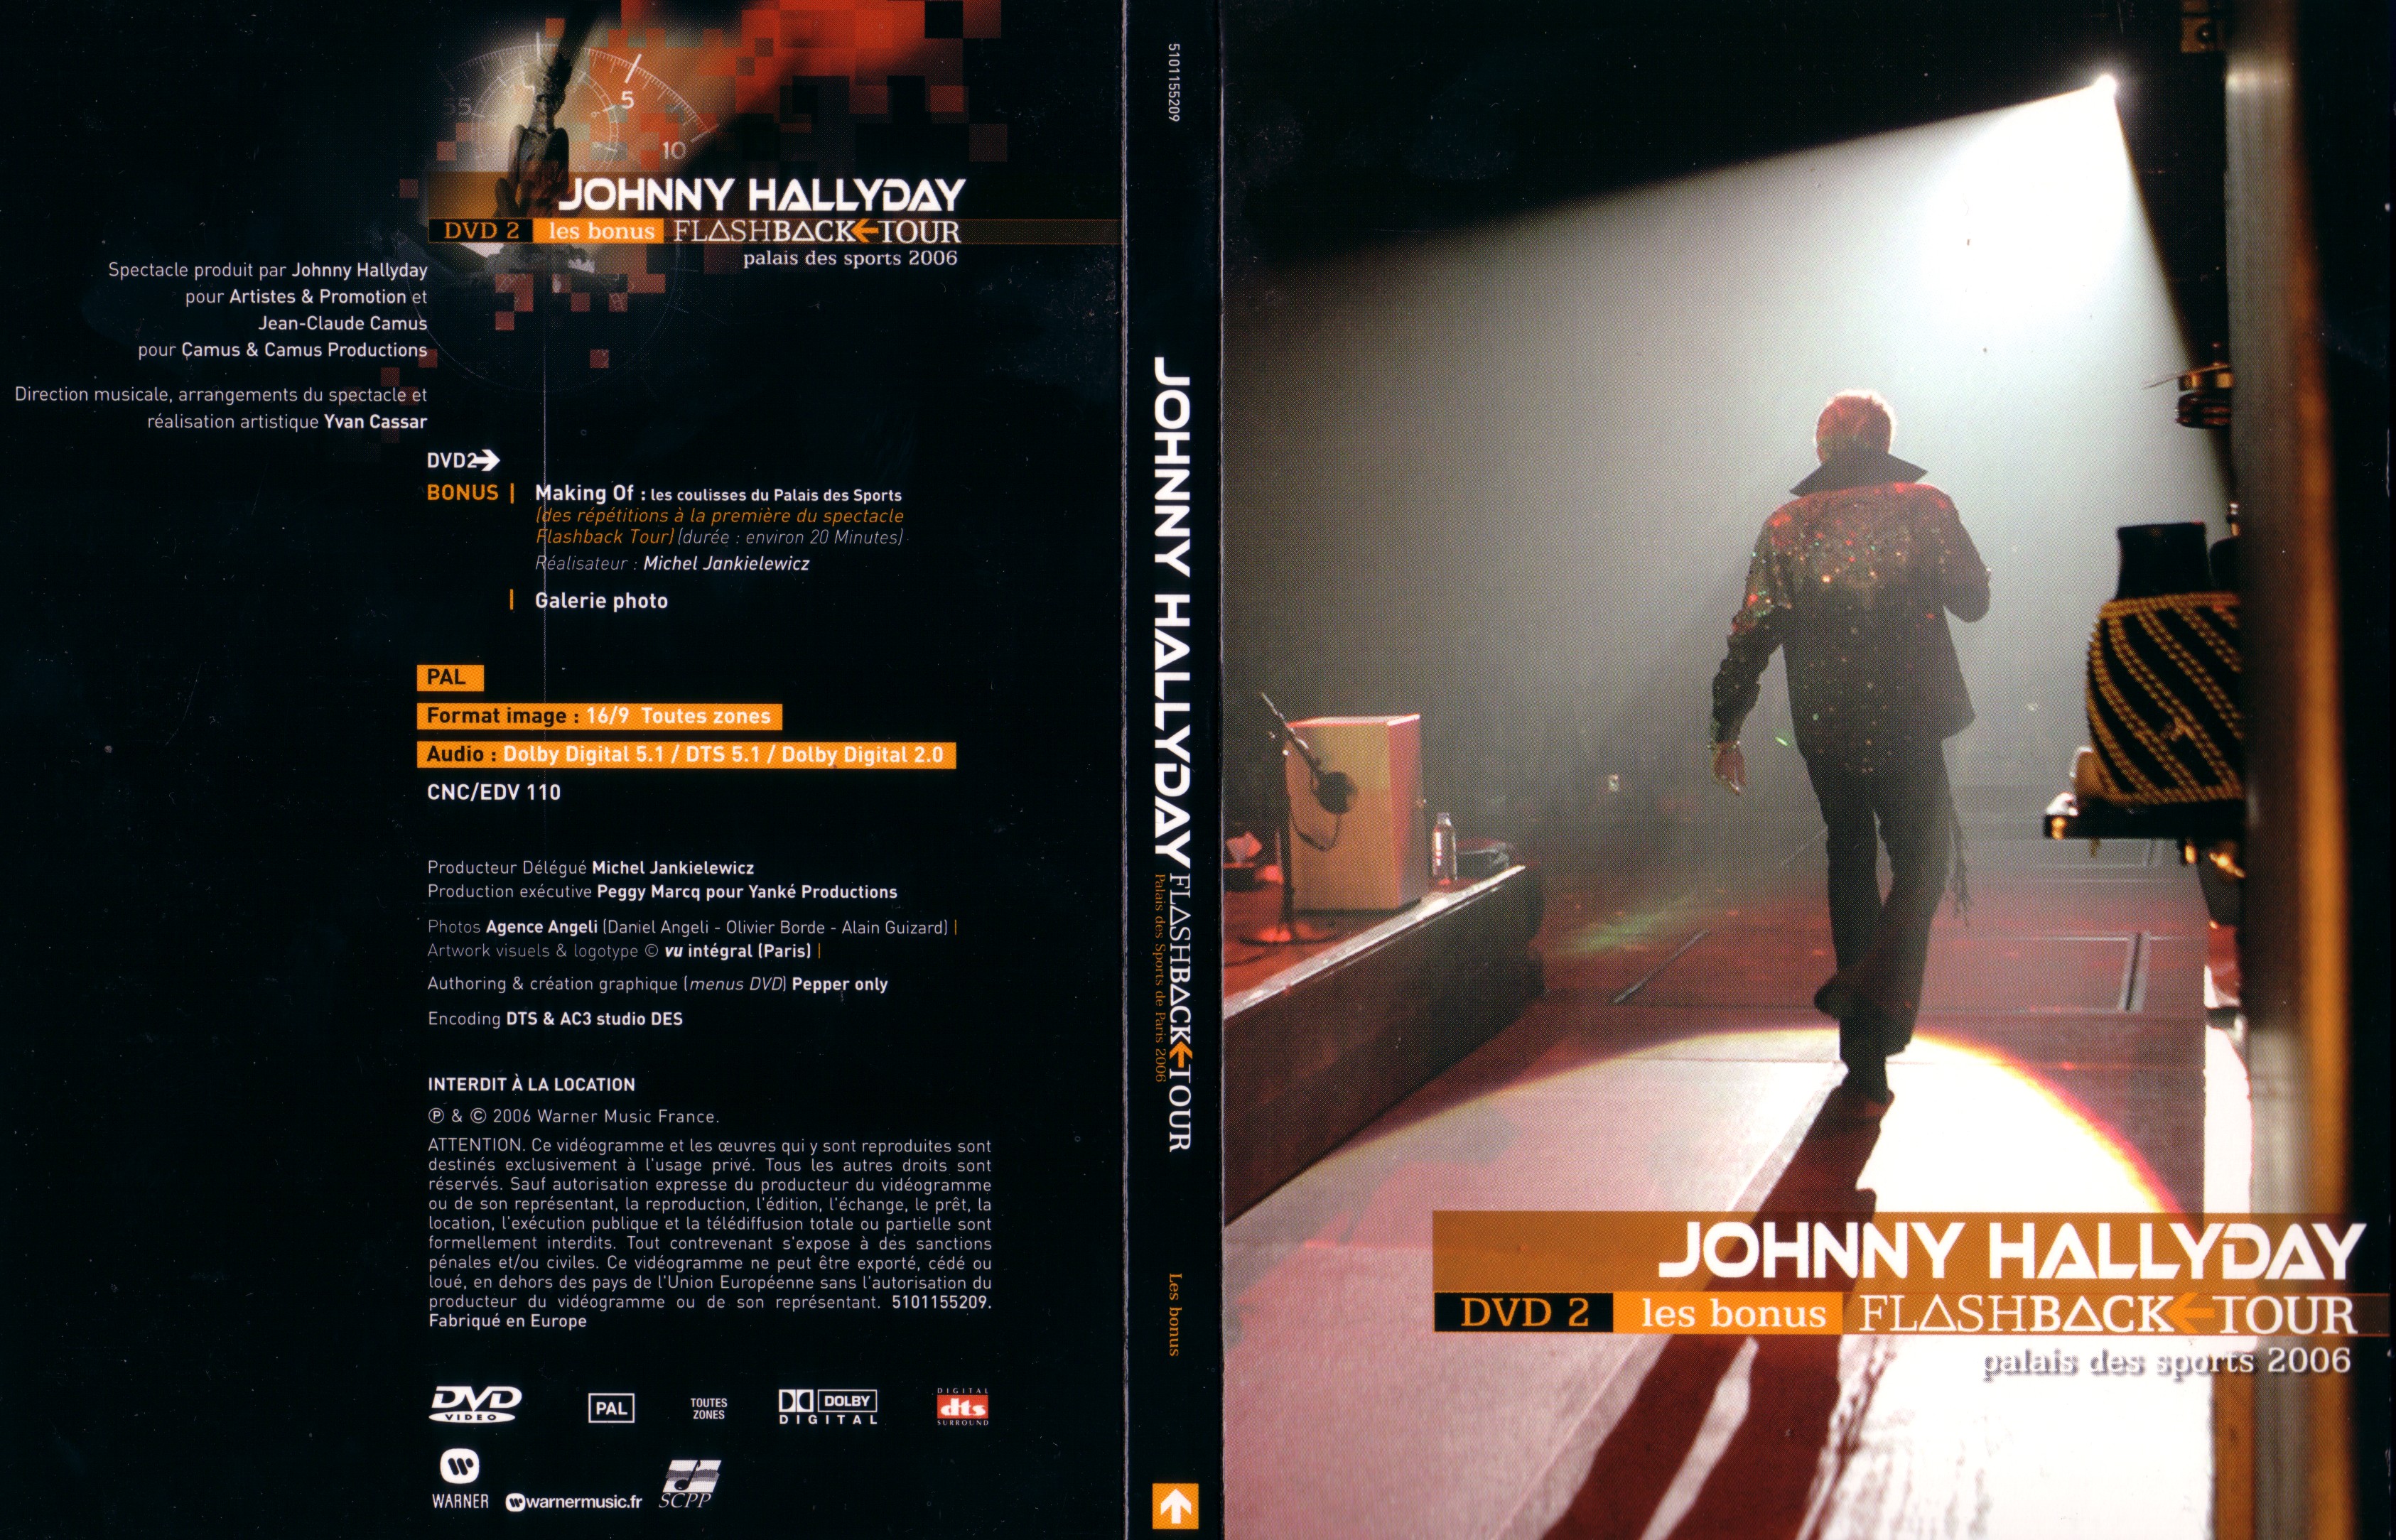 Jaquette DVD Johnny Hallyday Flashback Tour 2006 DVD 2